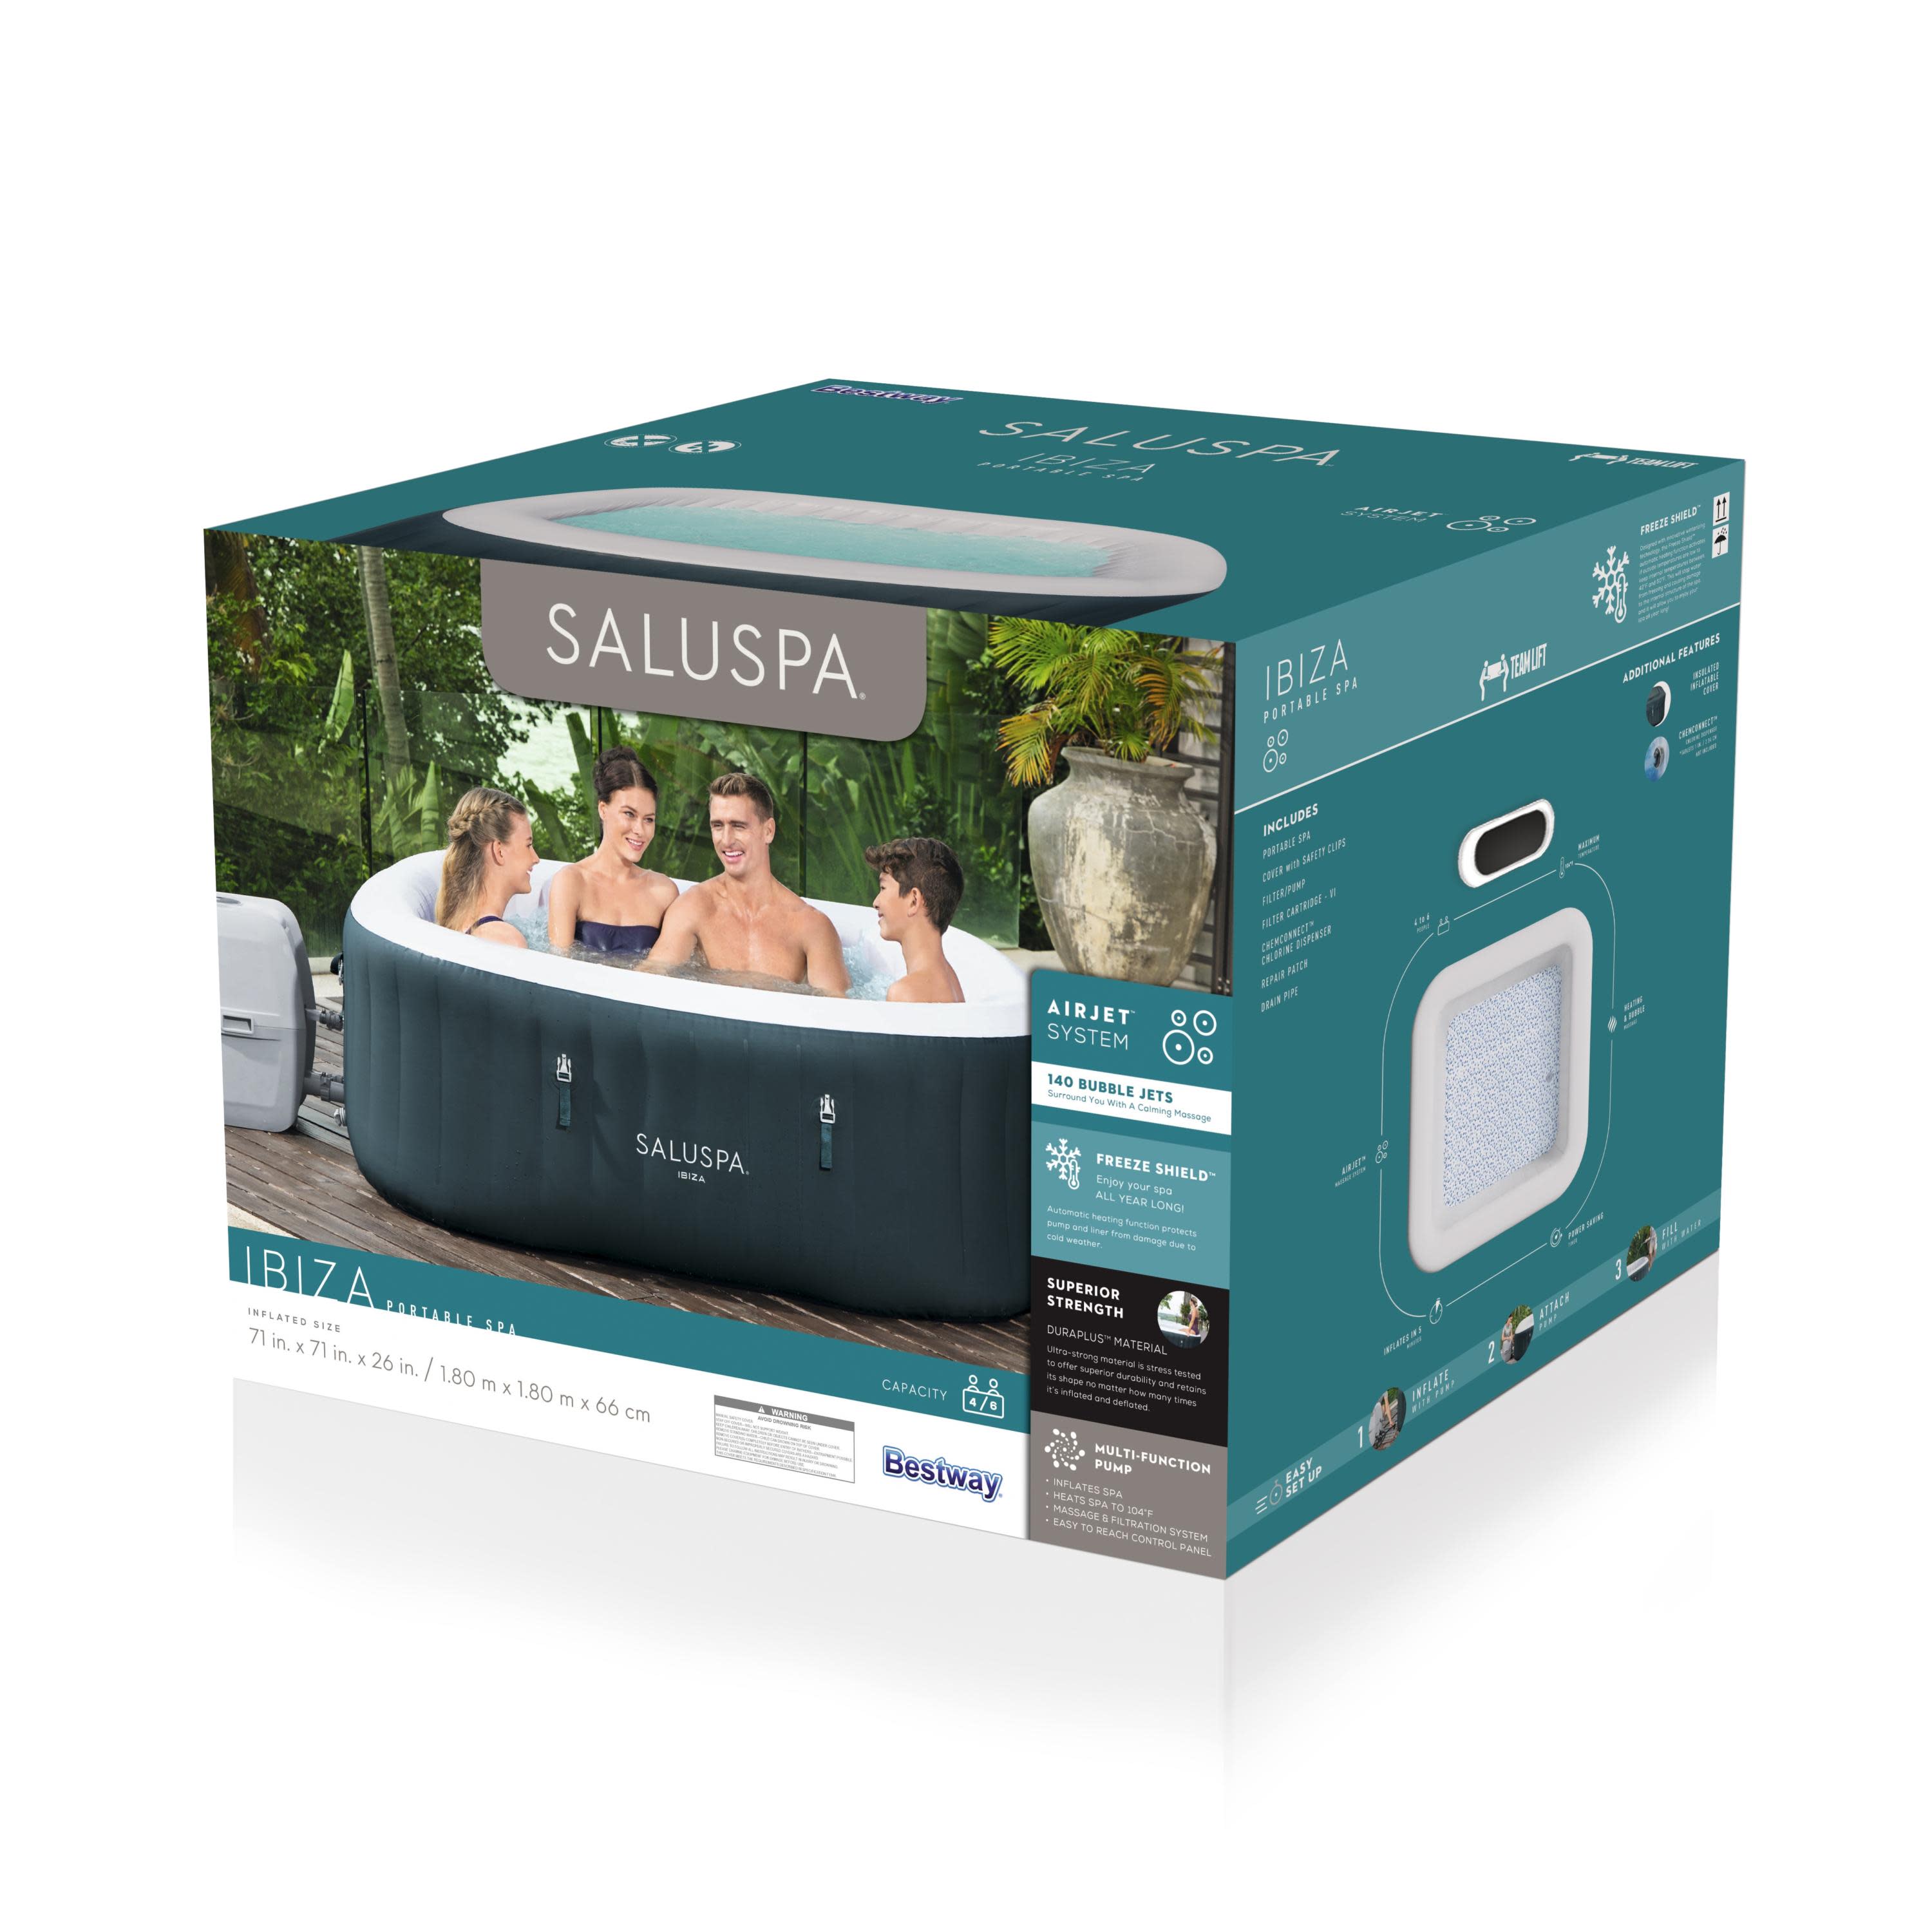 SaluSpa Ibiza AirJet Inflatable Hot Tub Spa 4-6 Person, Maximum Temperature of 104˚F - image 2 of 9